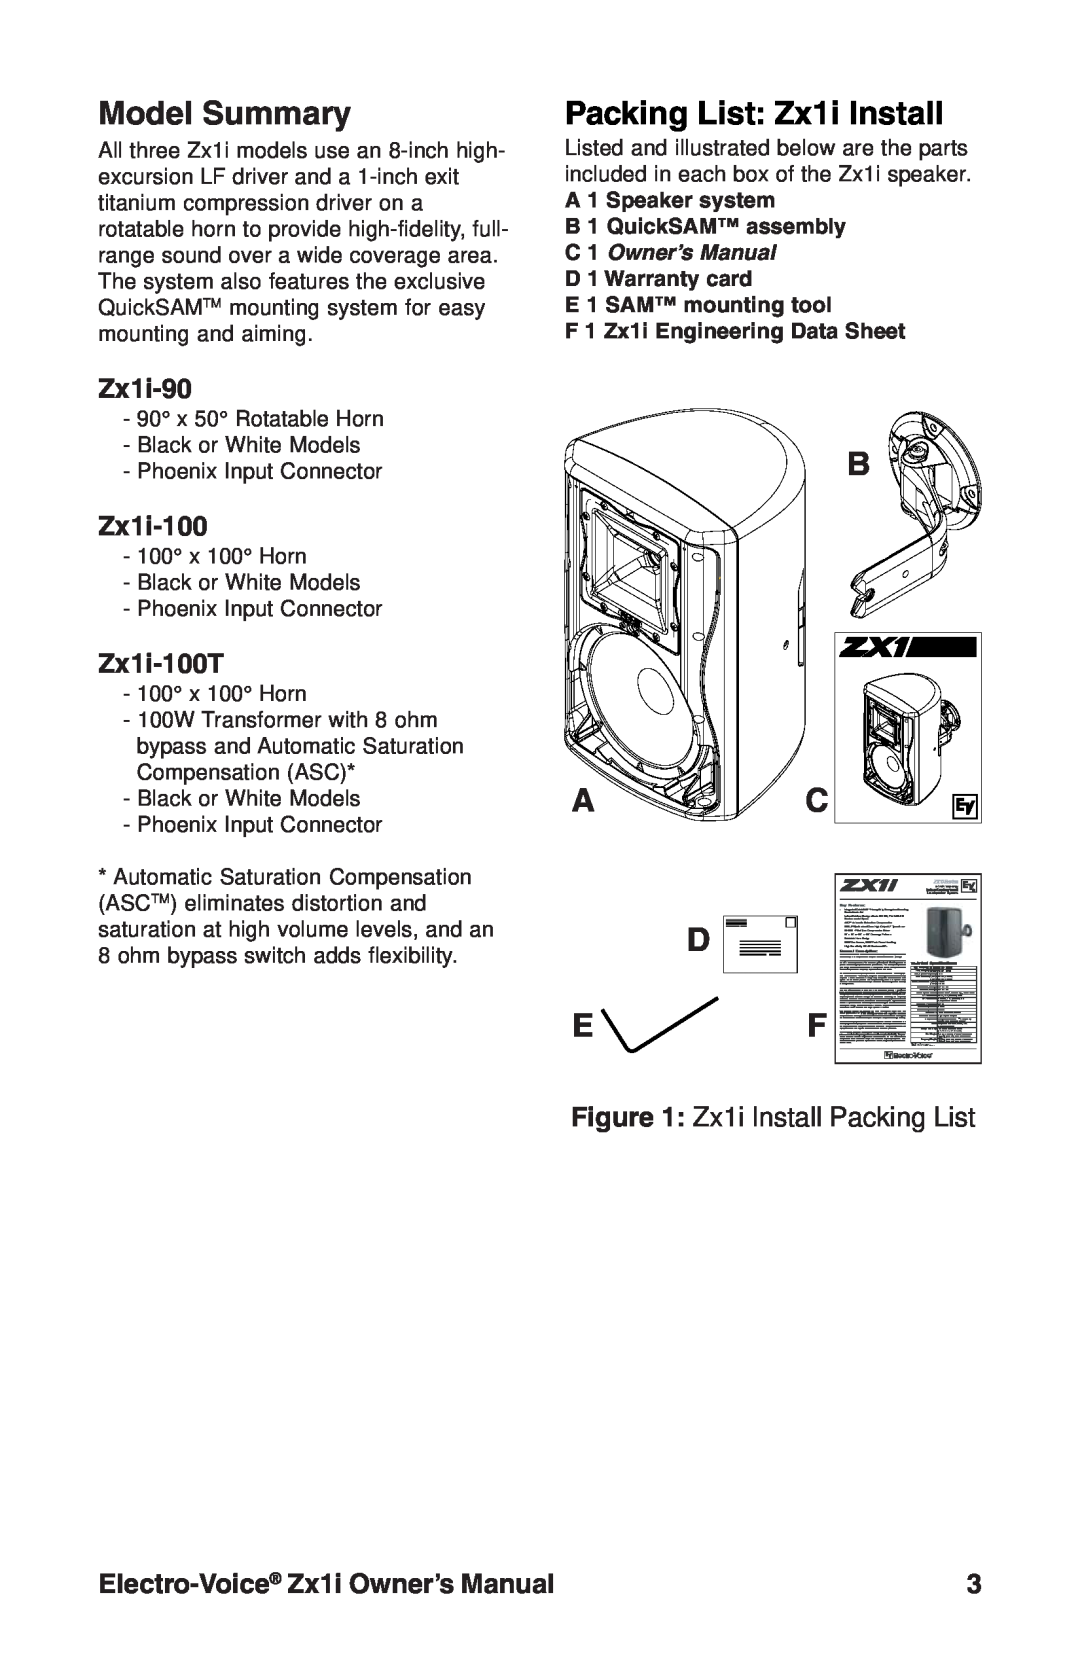 Electro-Voice Zx1i-100T Model Summary, B Ac, D Ef, Zx1i-90, Zx1i Install Packing List, Electro-Voice Zx1i Owner’s Manual 